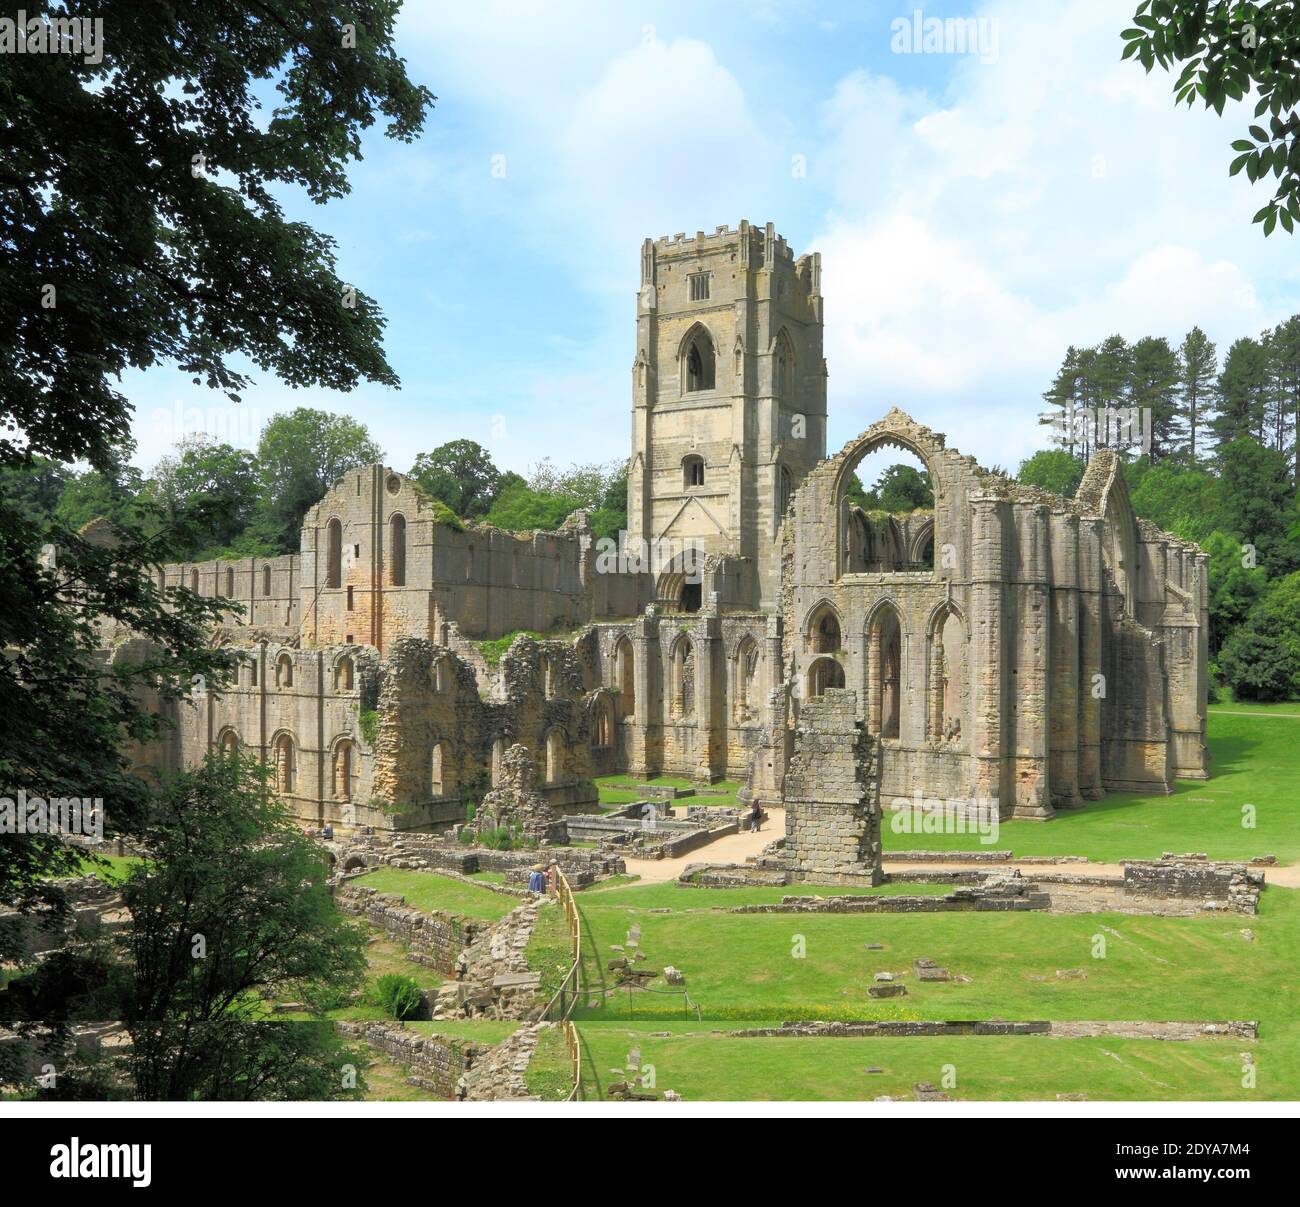 Fontänen Abtei, mittelalterliche, Zisterzienserkloster, Ruinen, Yorkshire Stockfoto